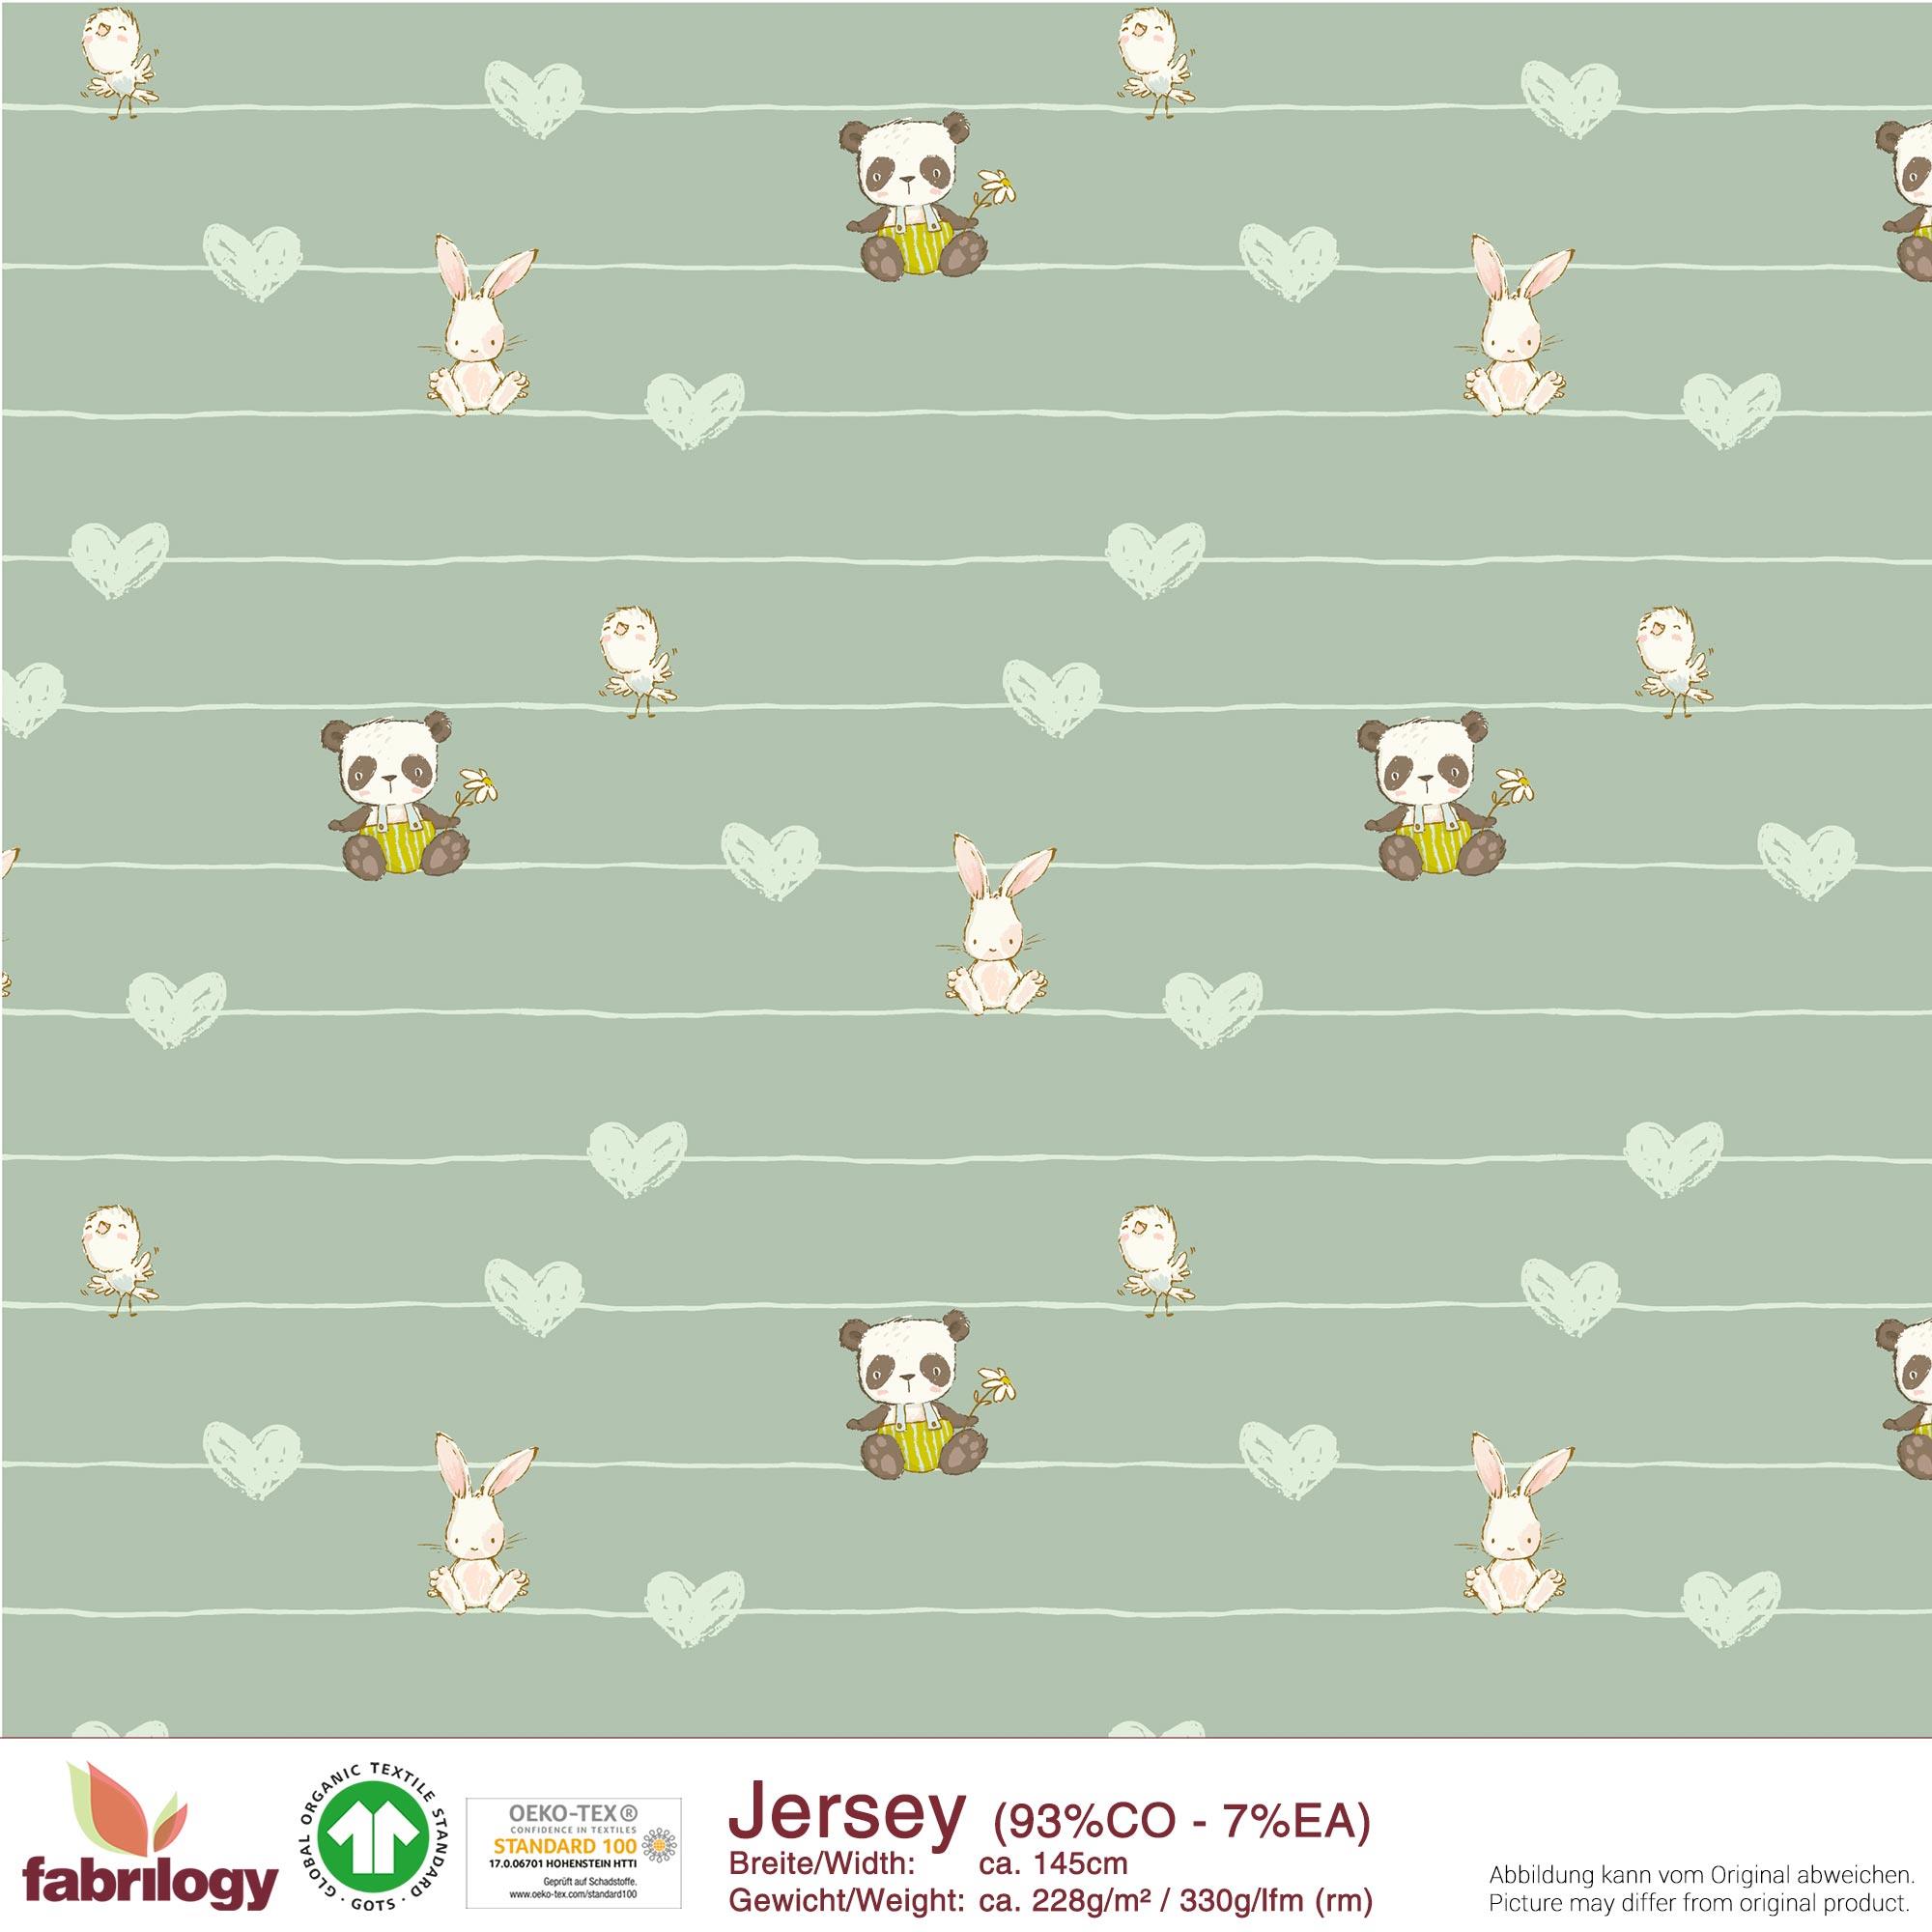 Stripe panda rabbit bird heart - GOTS 6.0